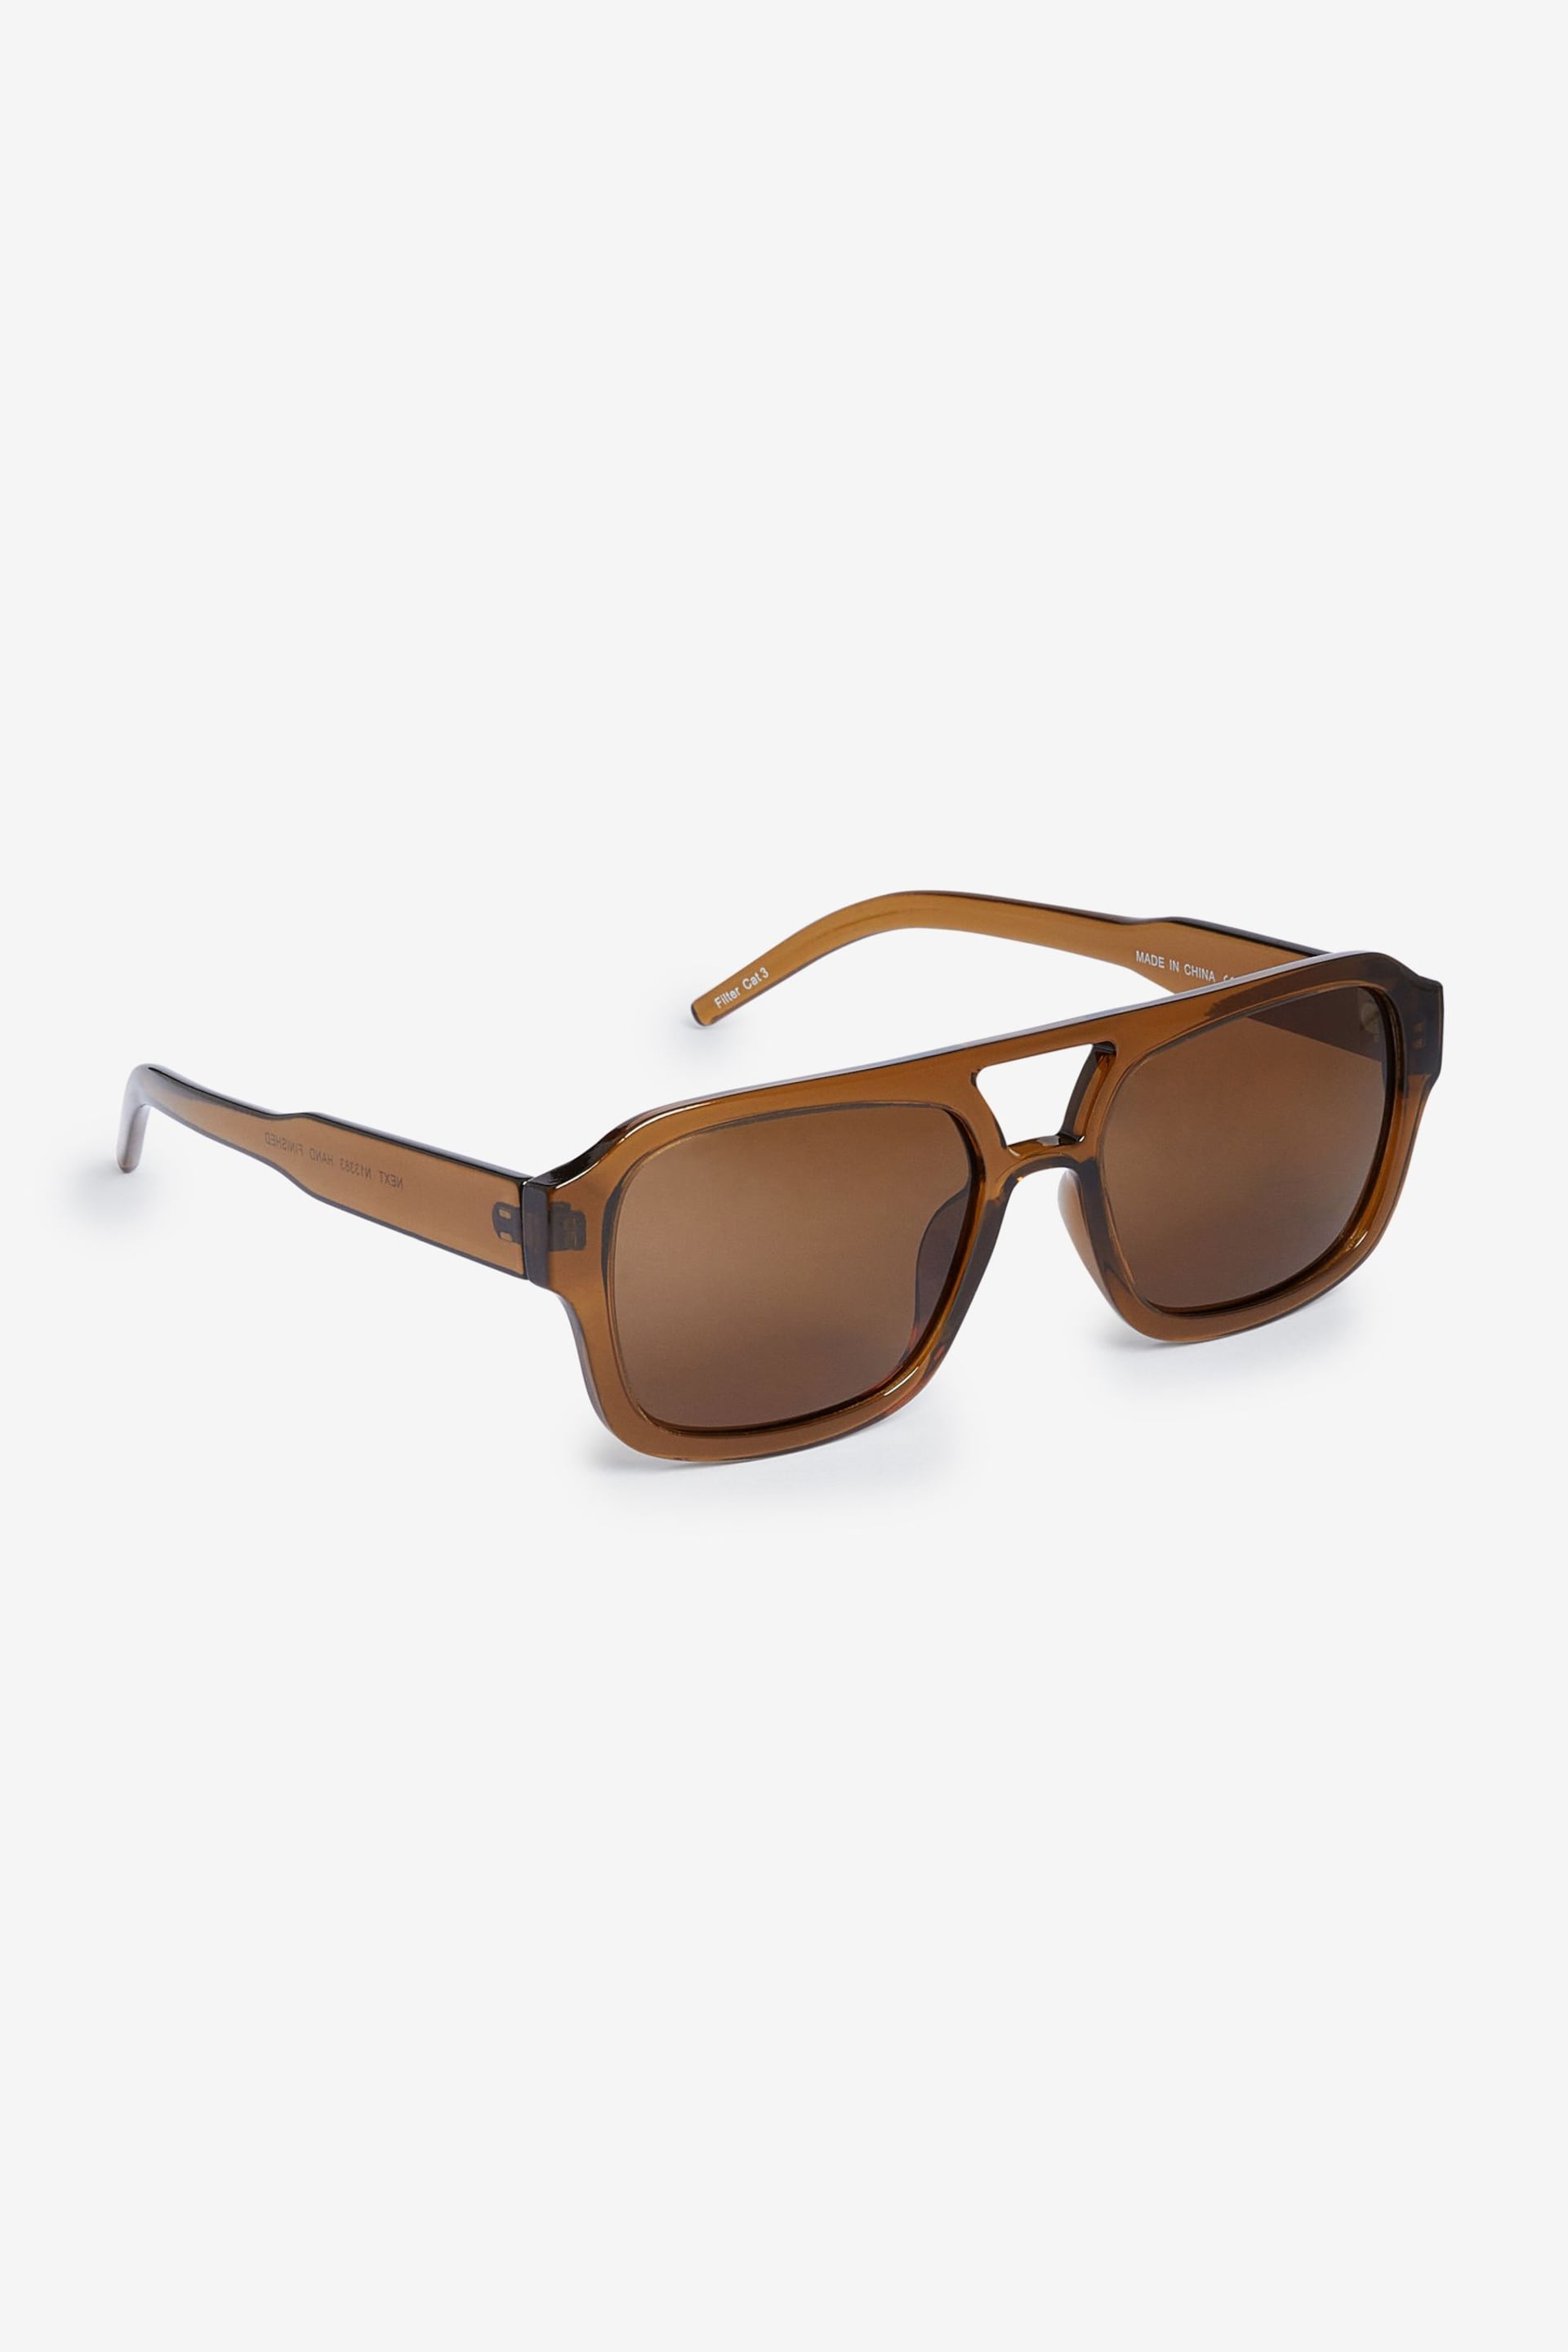 Honey Brown Navigator Polarised Sunglasses - Image 3 of 4